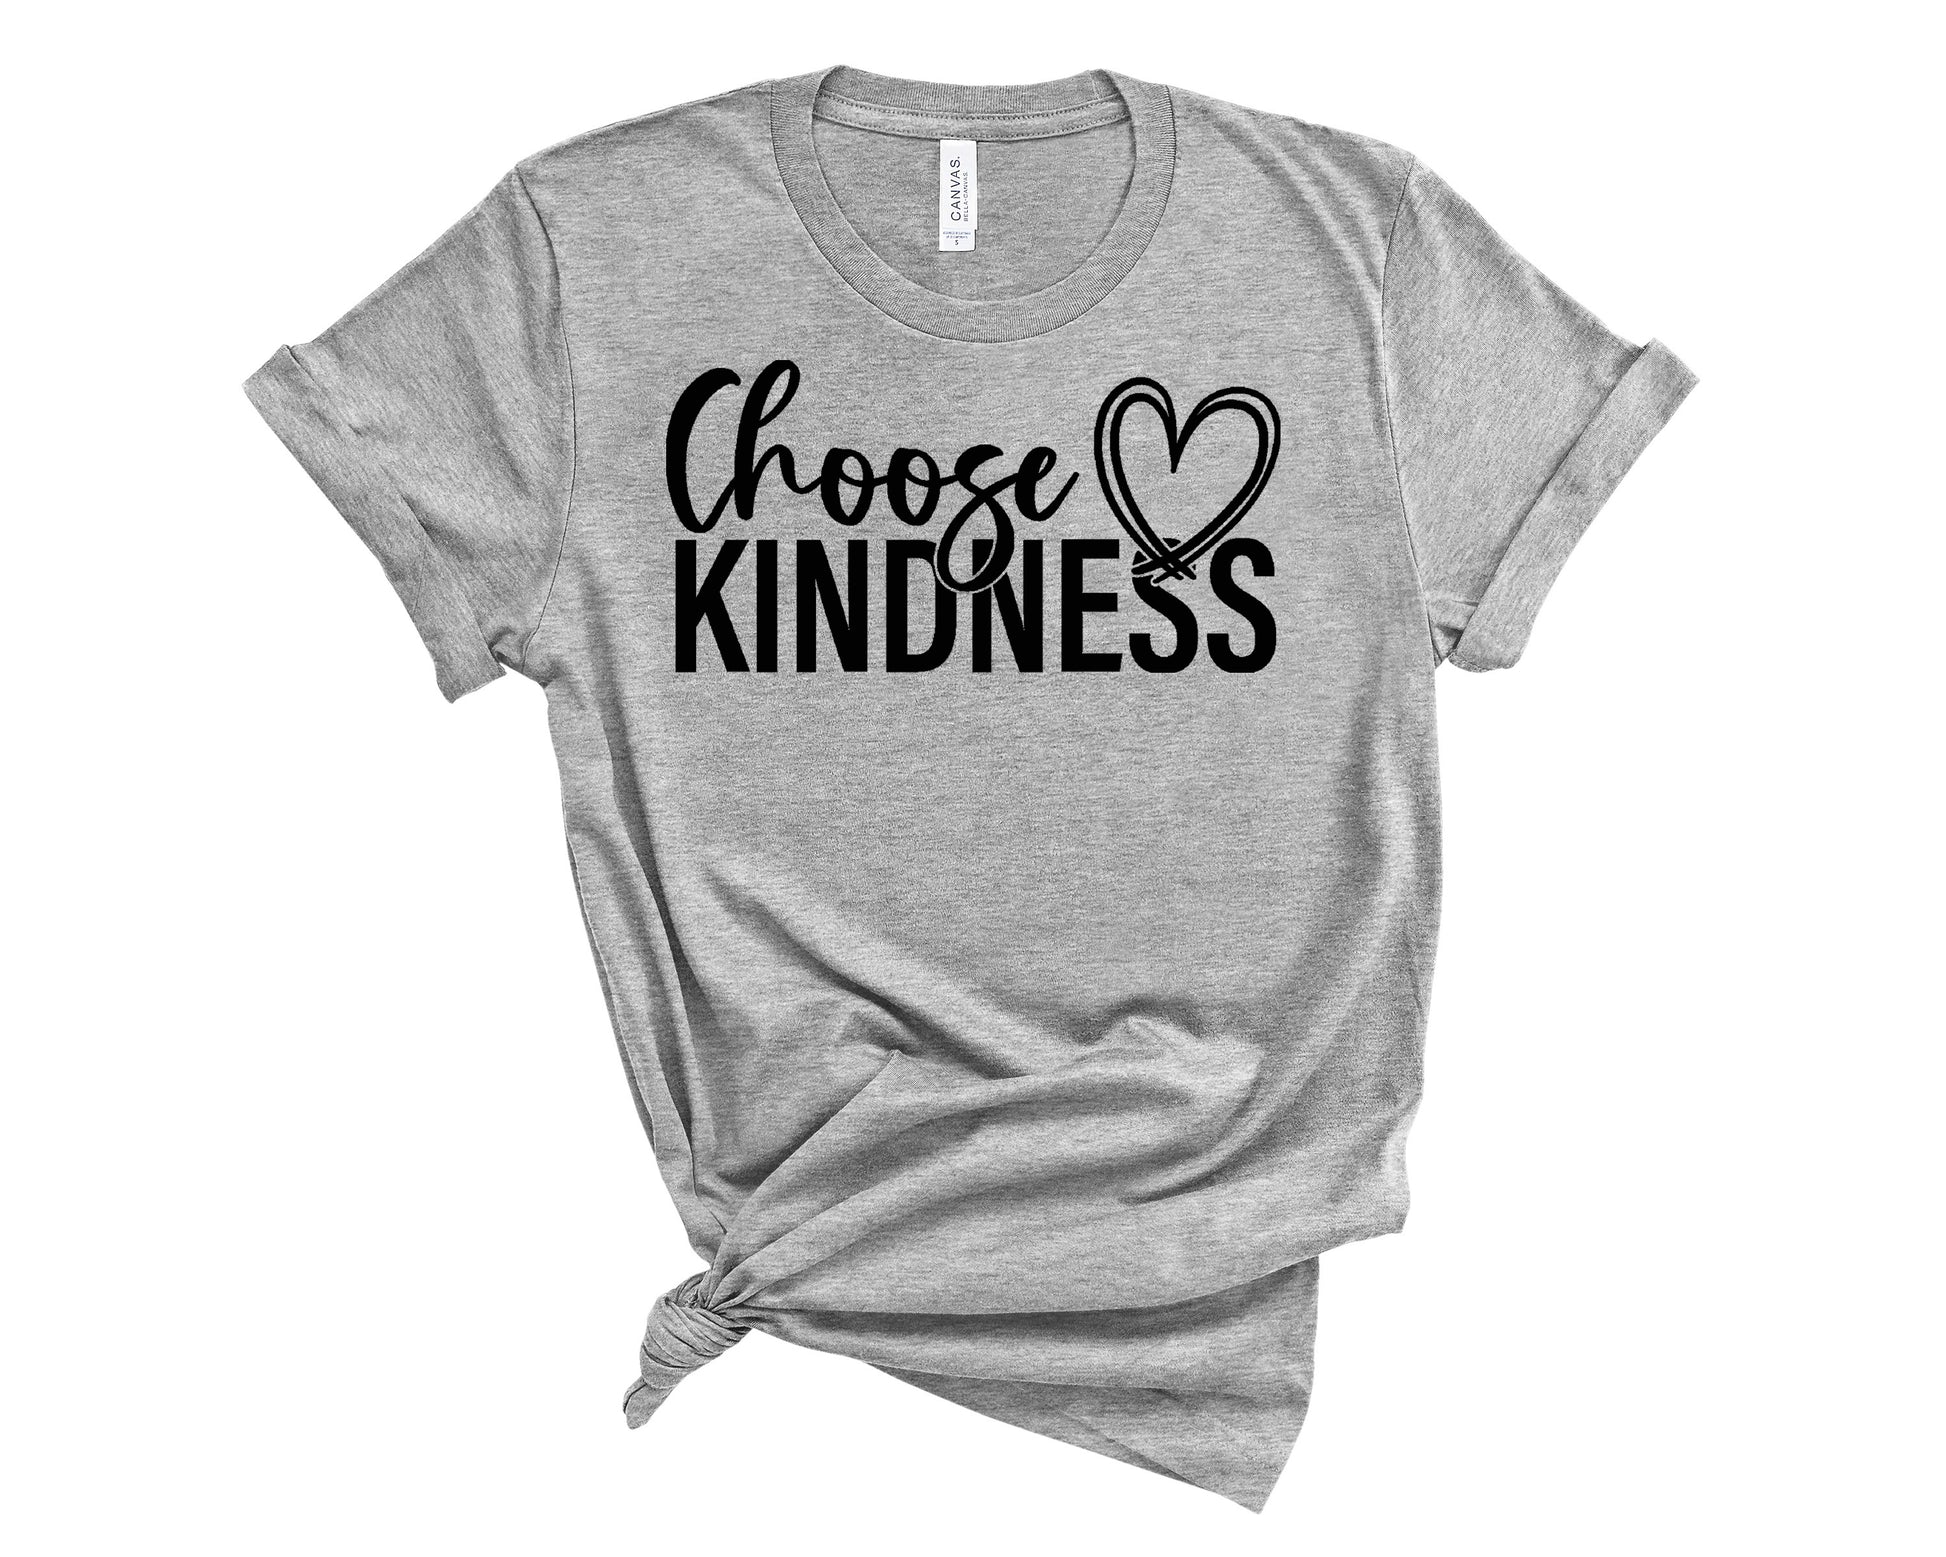 choose kindness shirt